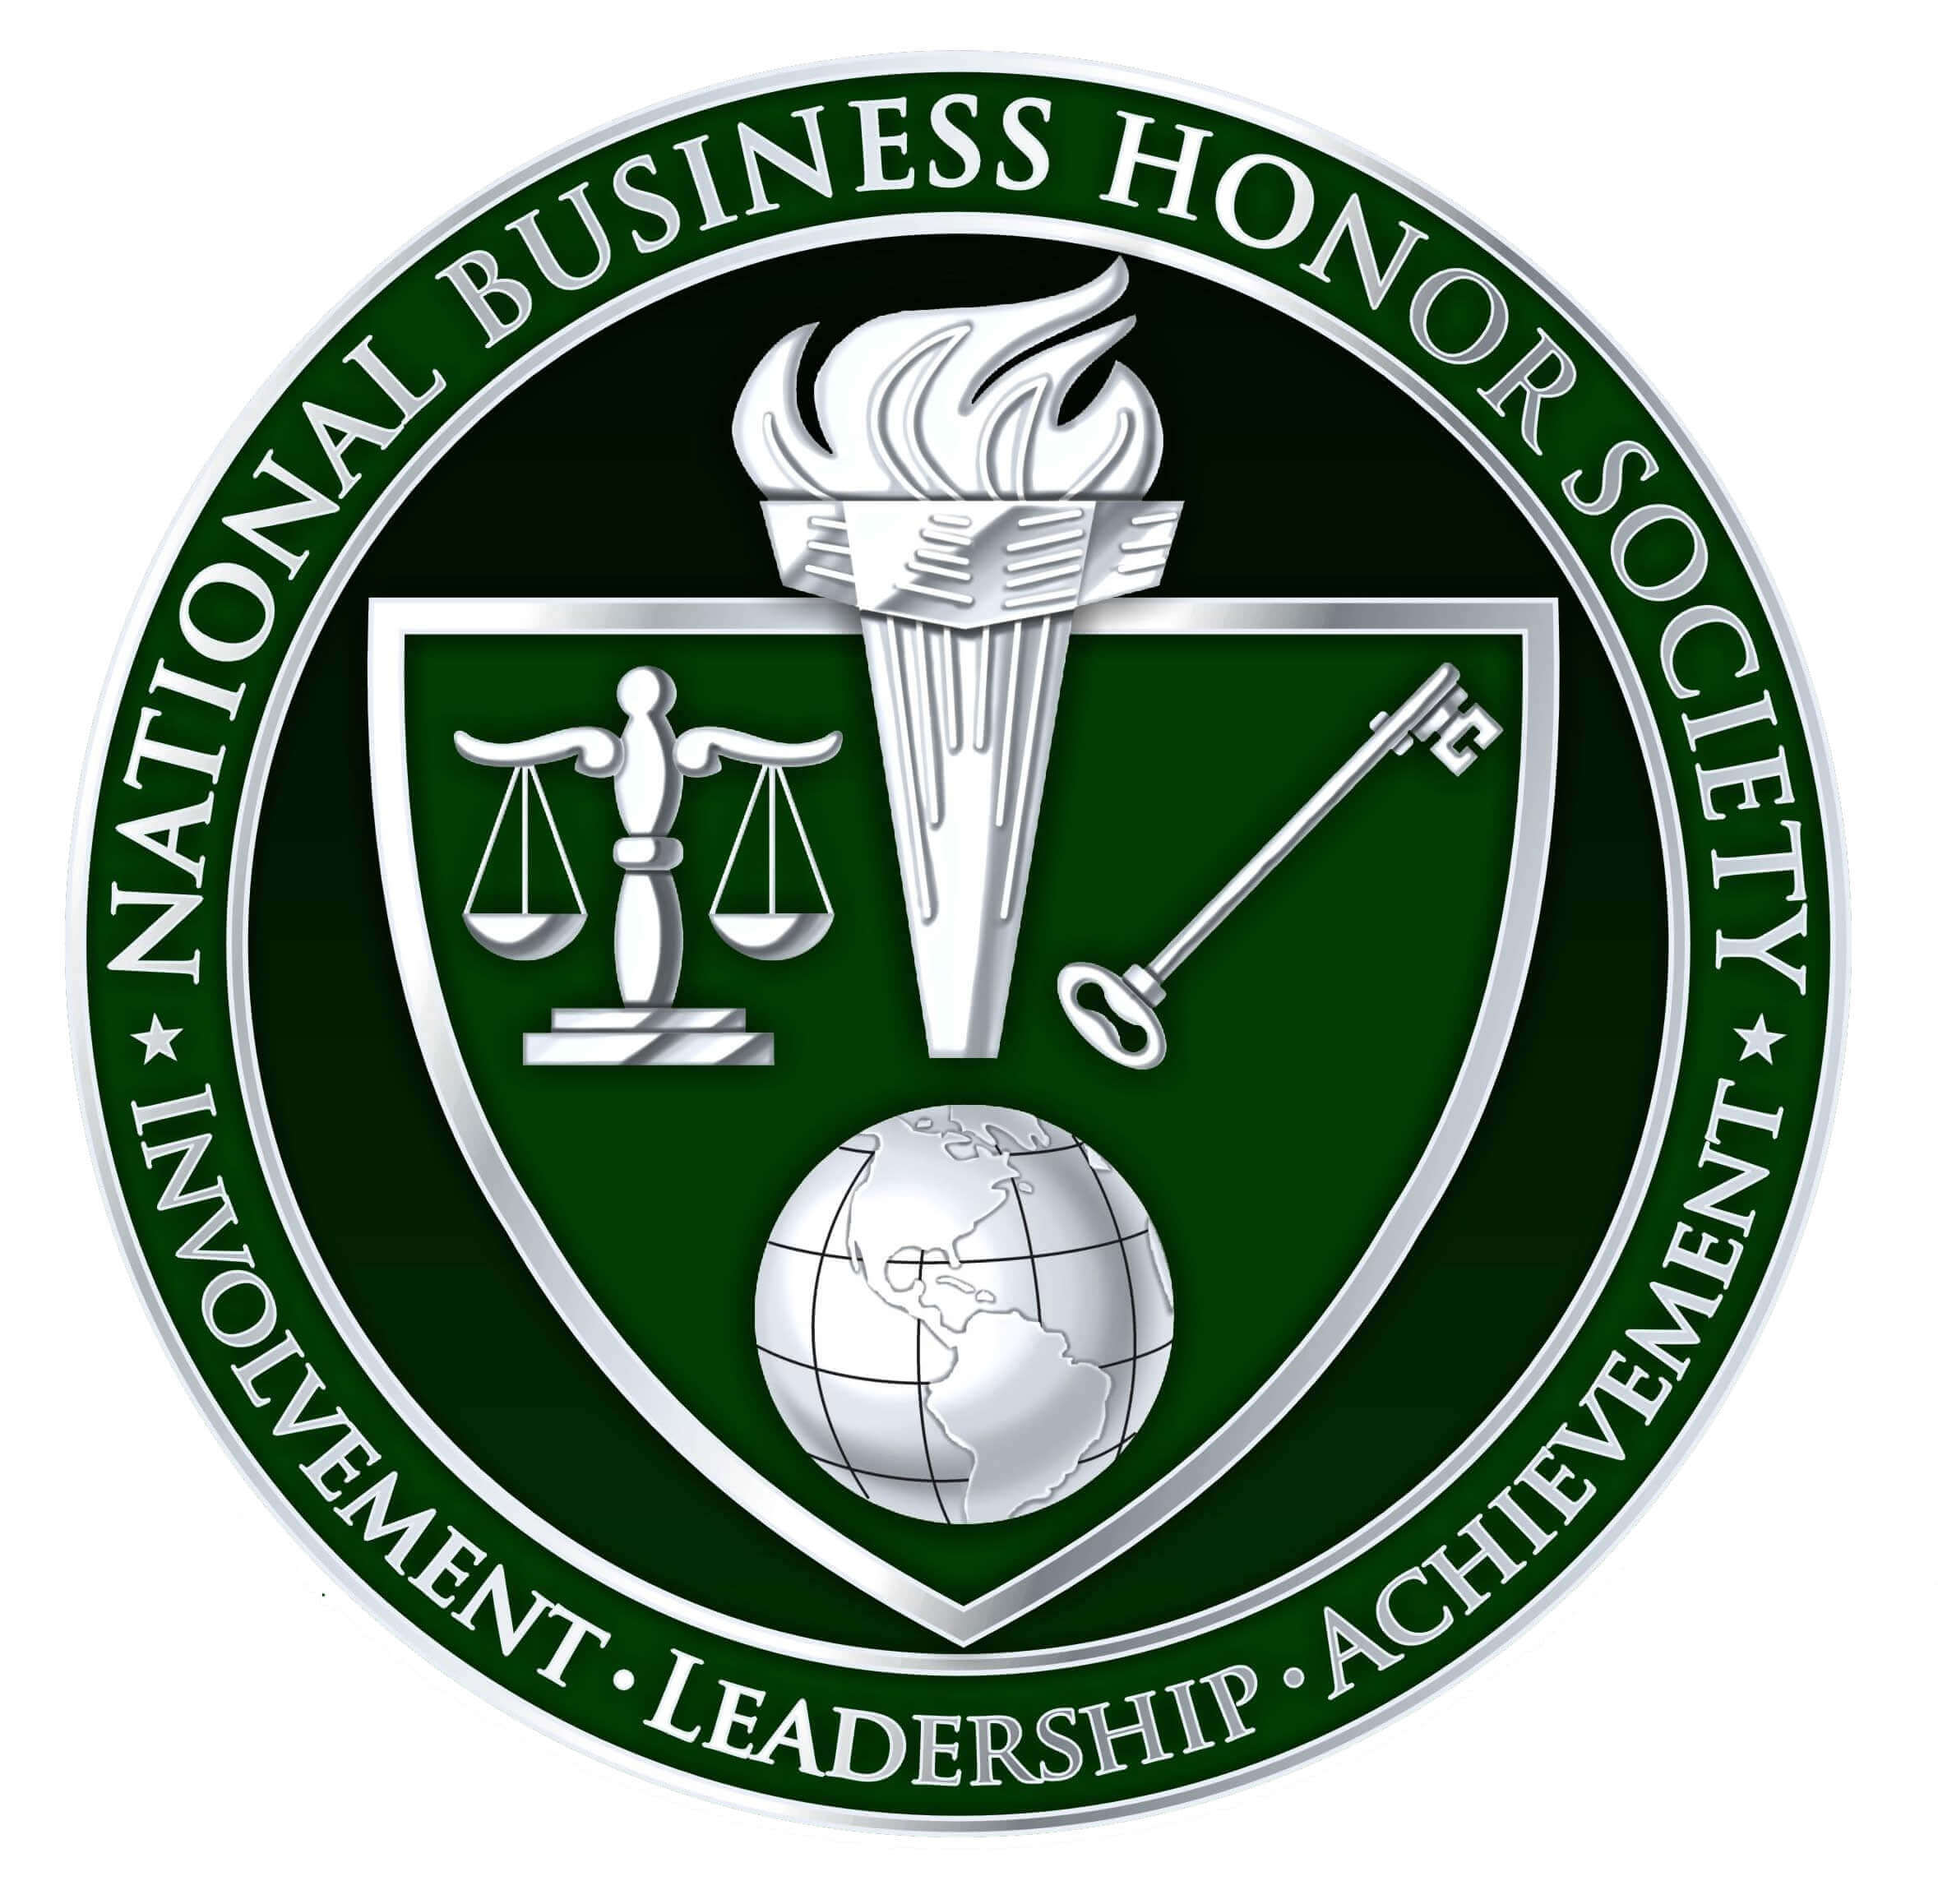 Thumbnail forNational Business Honor Society